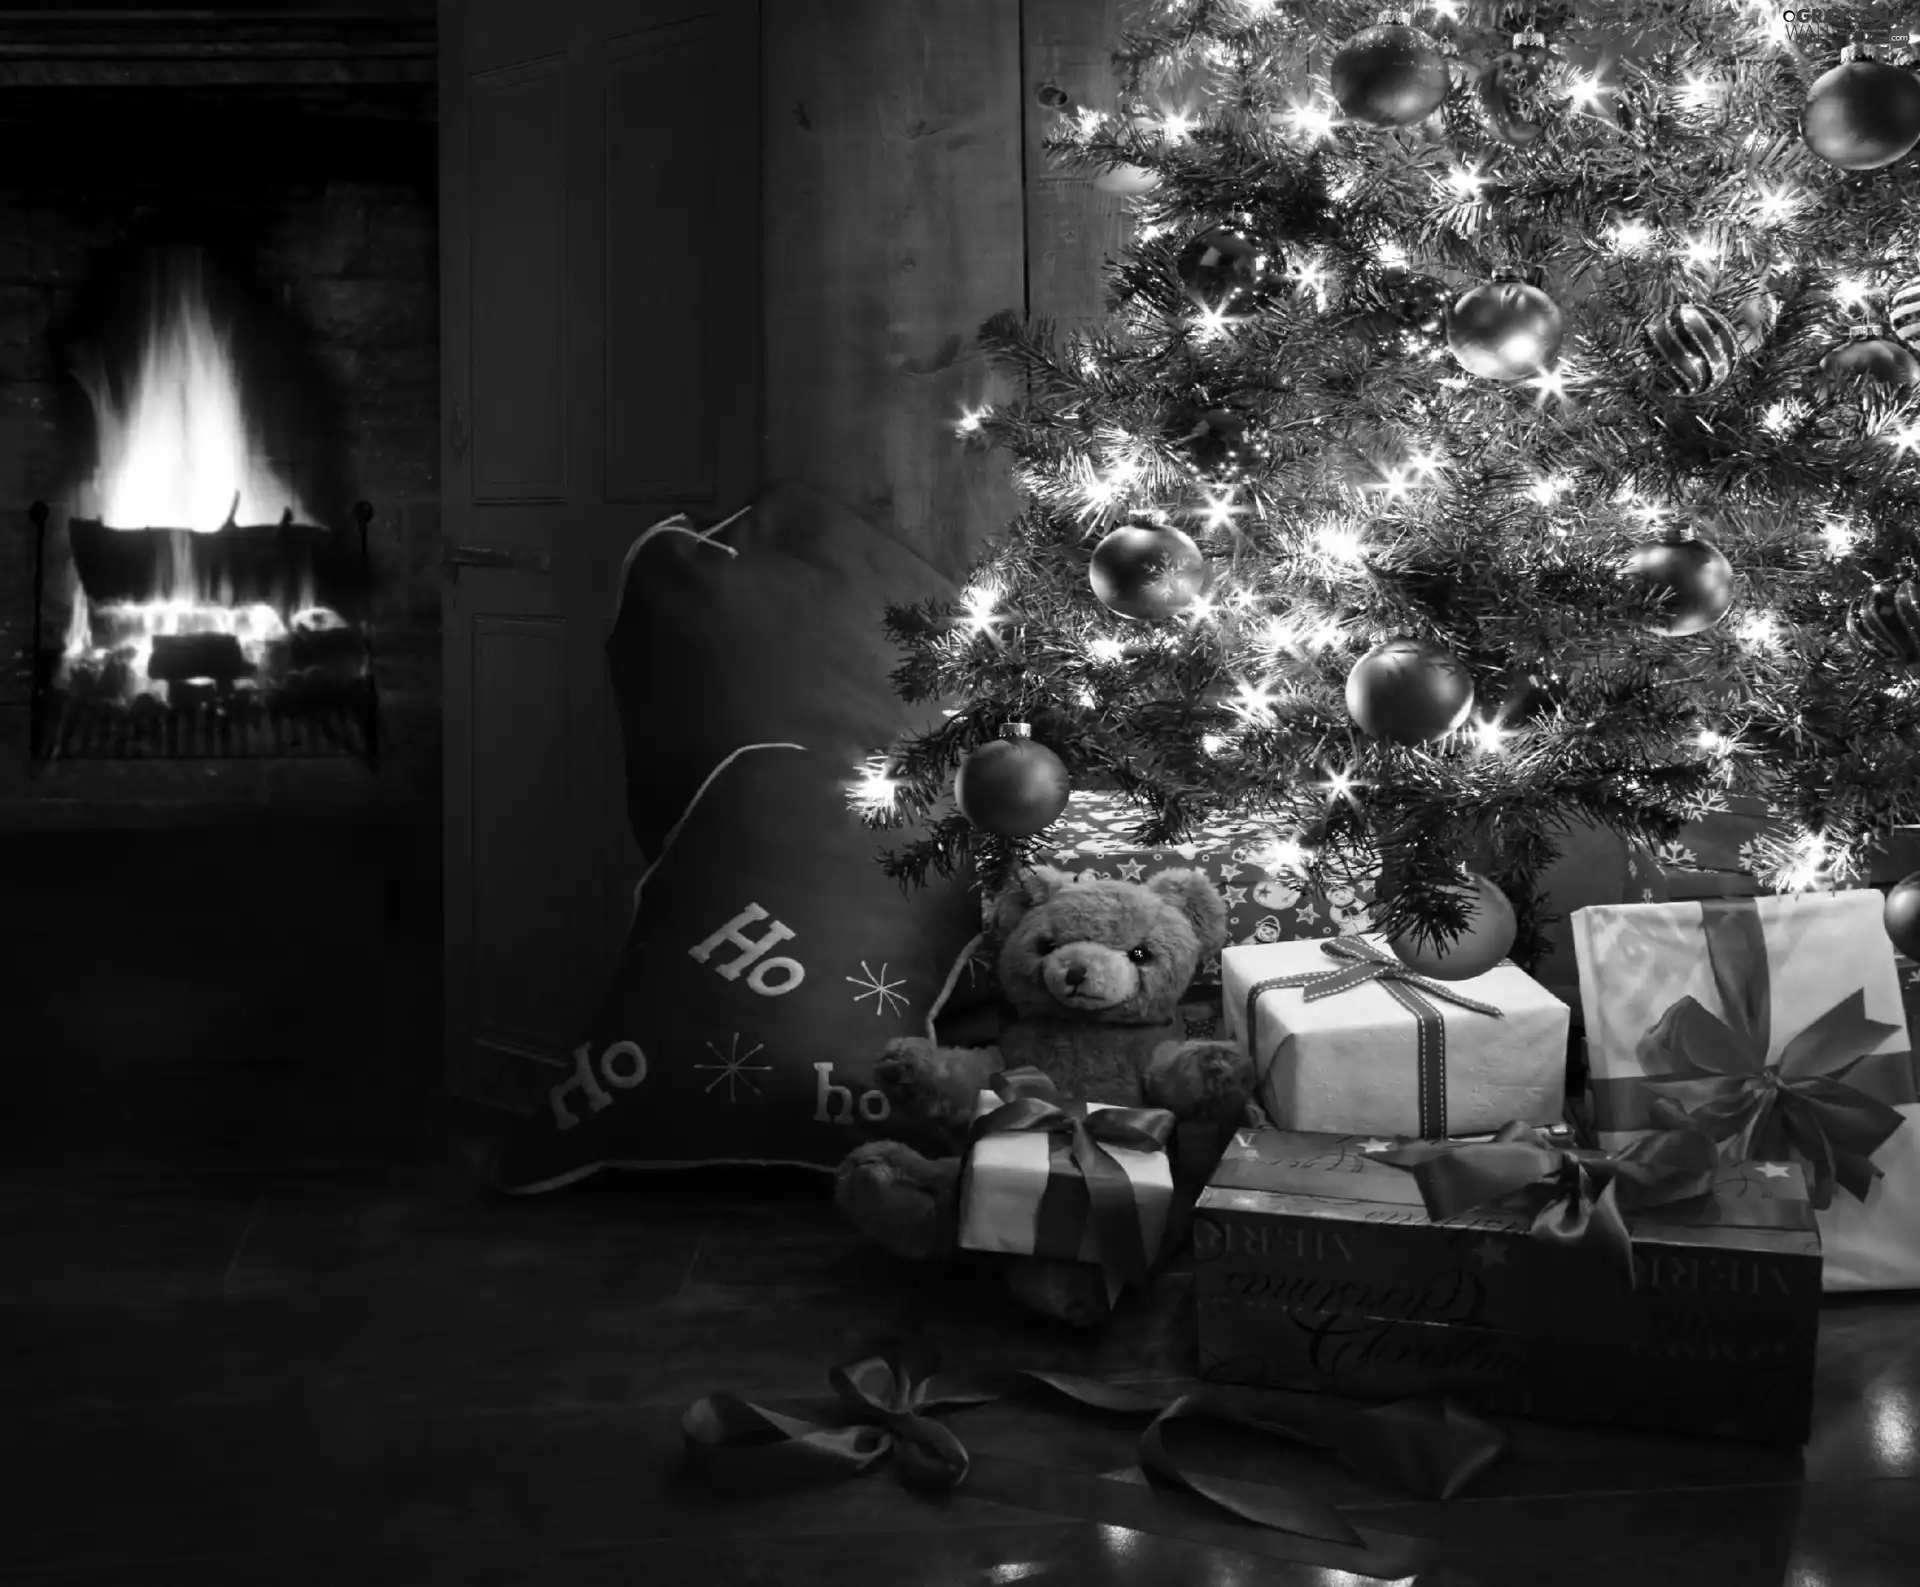 burner chimney, Beauty, christmas tree, gifts